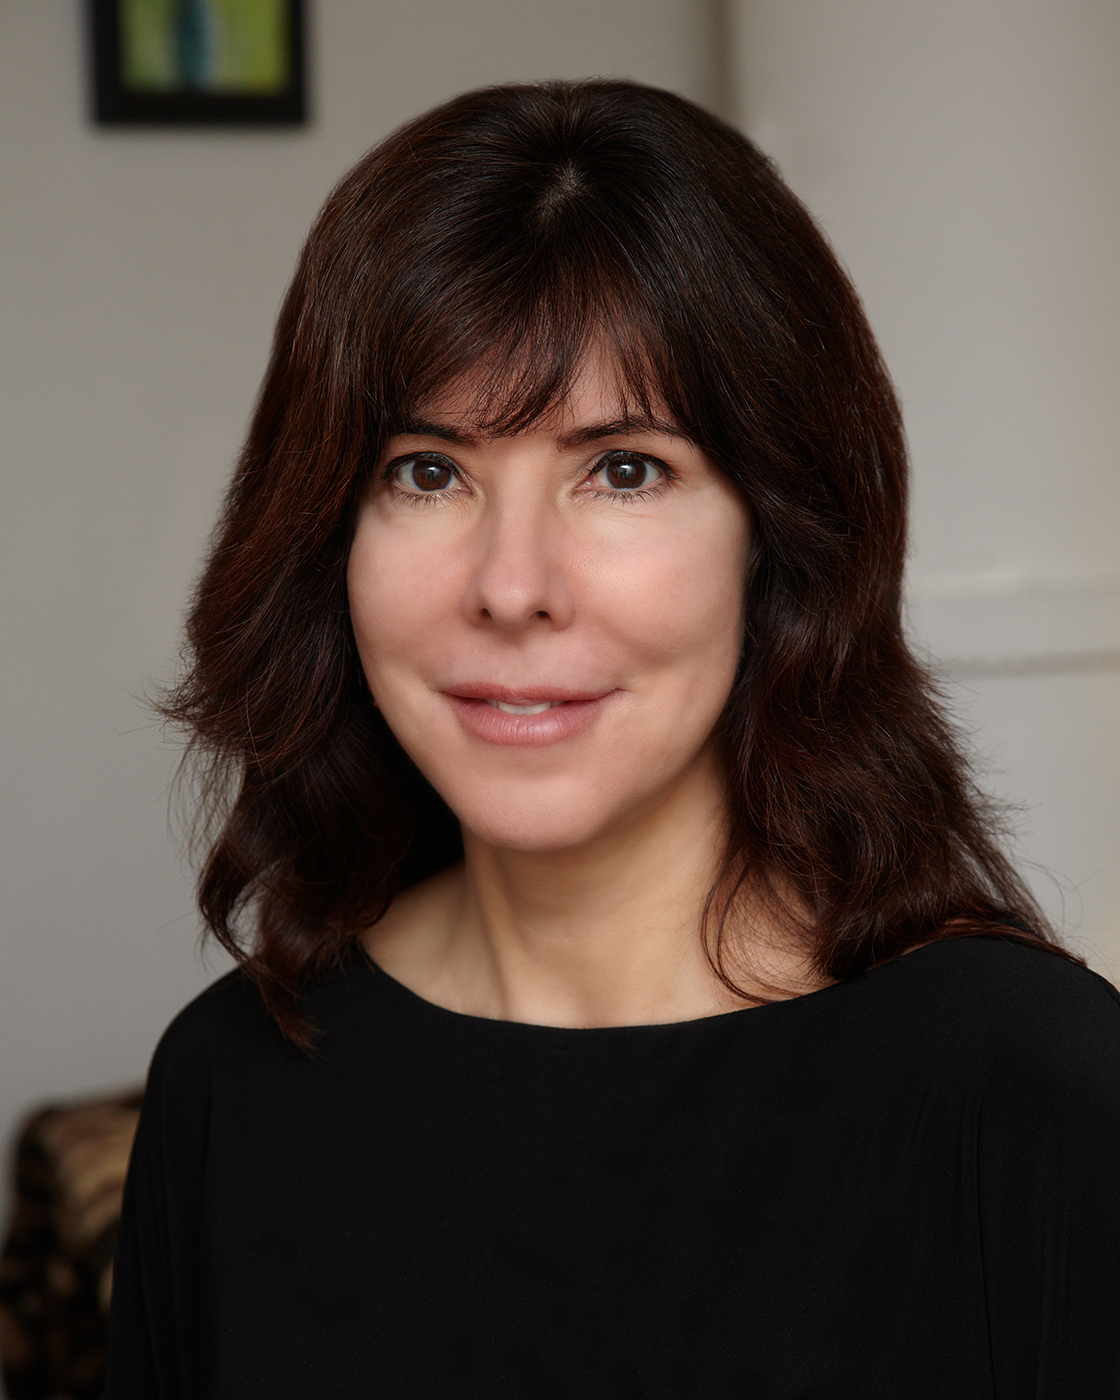                             Dr. Gina Villani, CEO and medical director of the RL Center